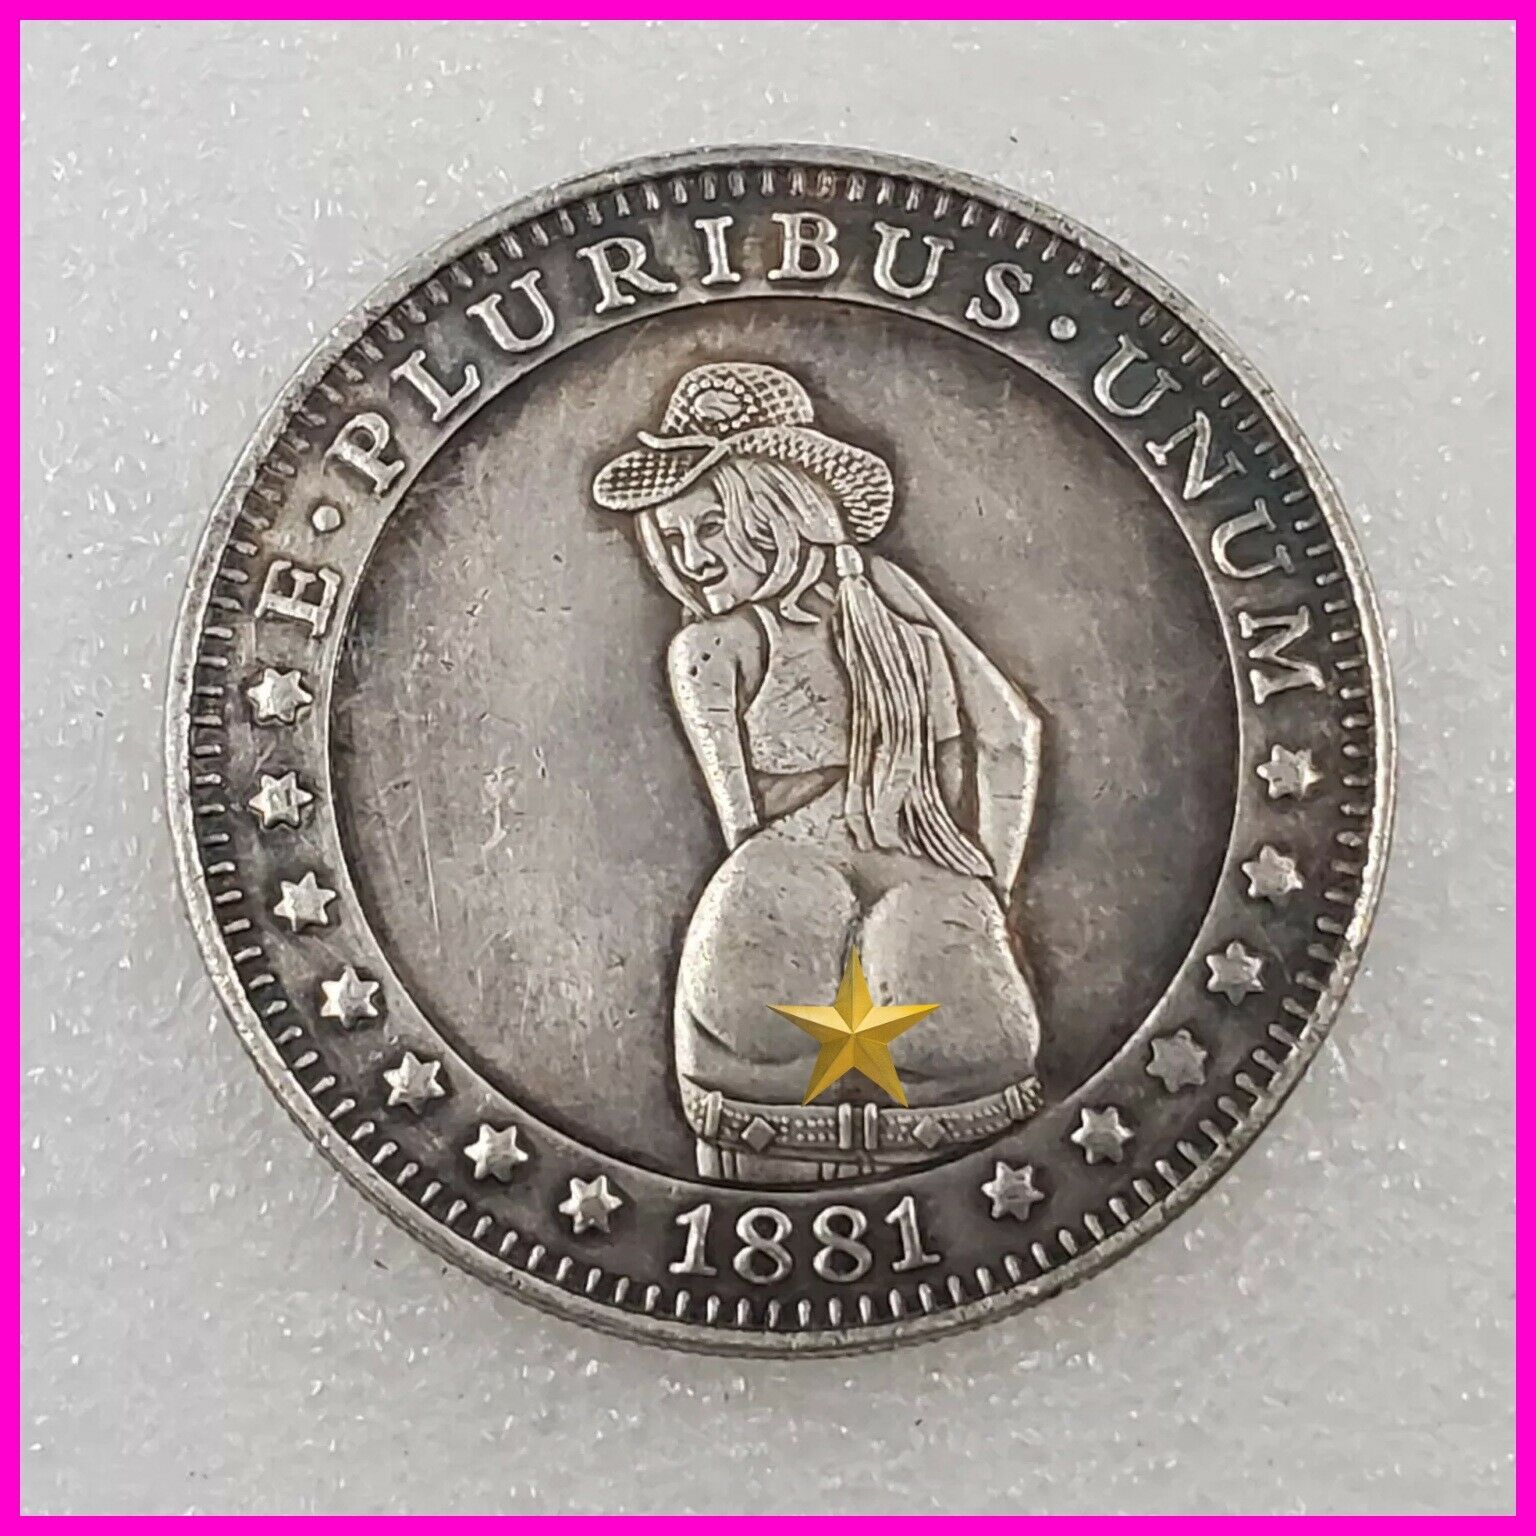 Sexy Girl Hobo Nickel Coin 1881 Commemorative Free Shipping 102 Hobo Nickels